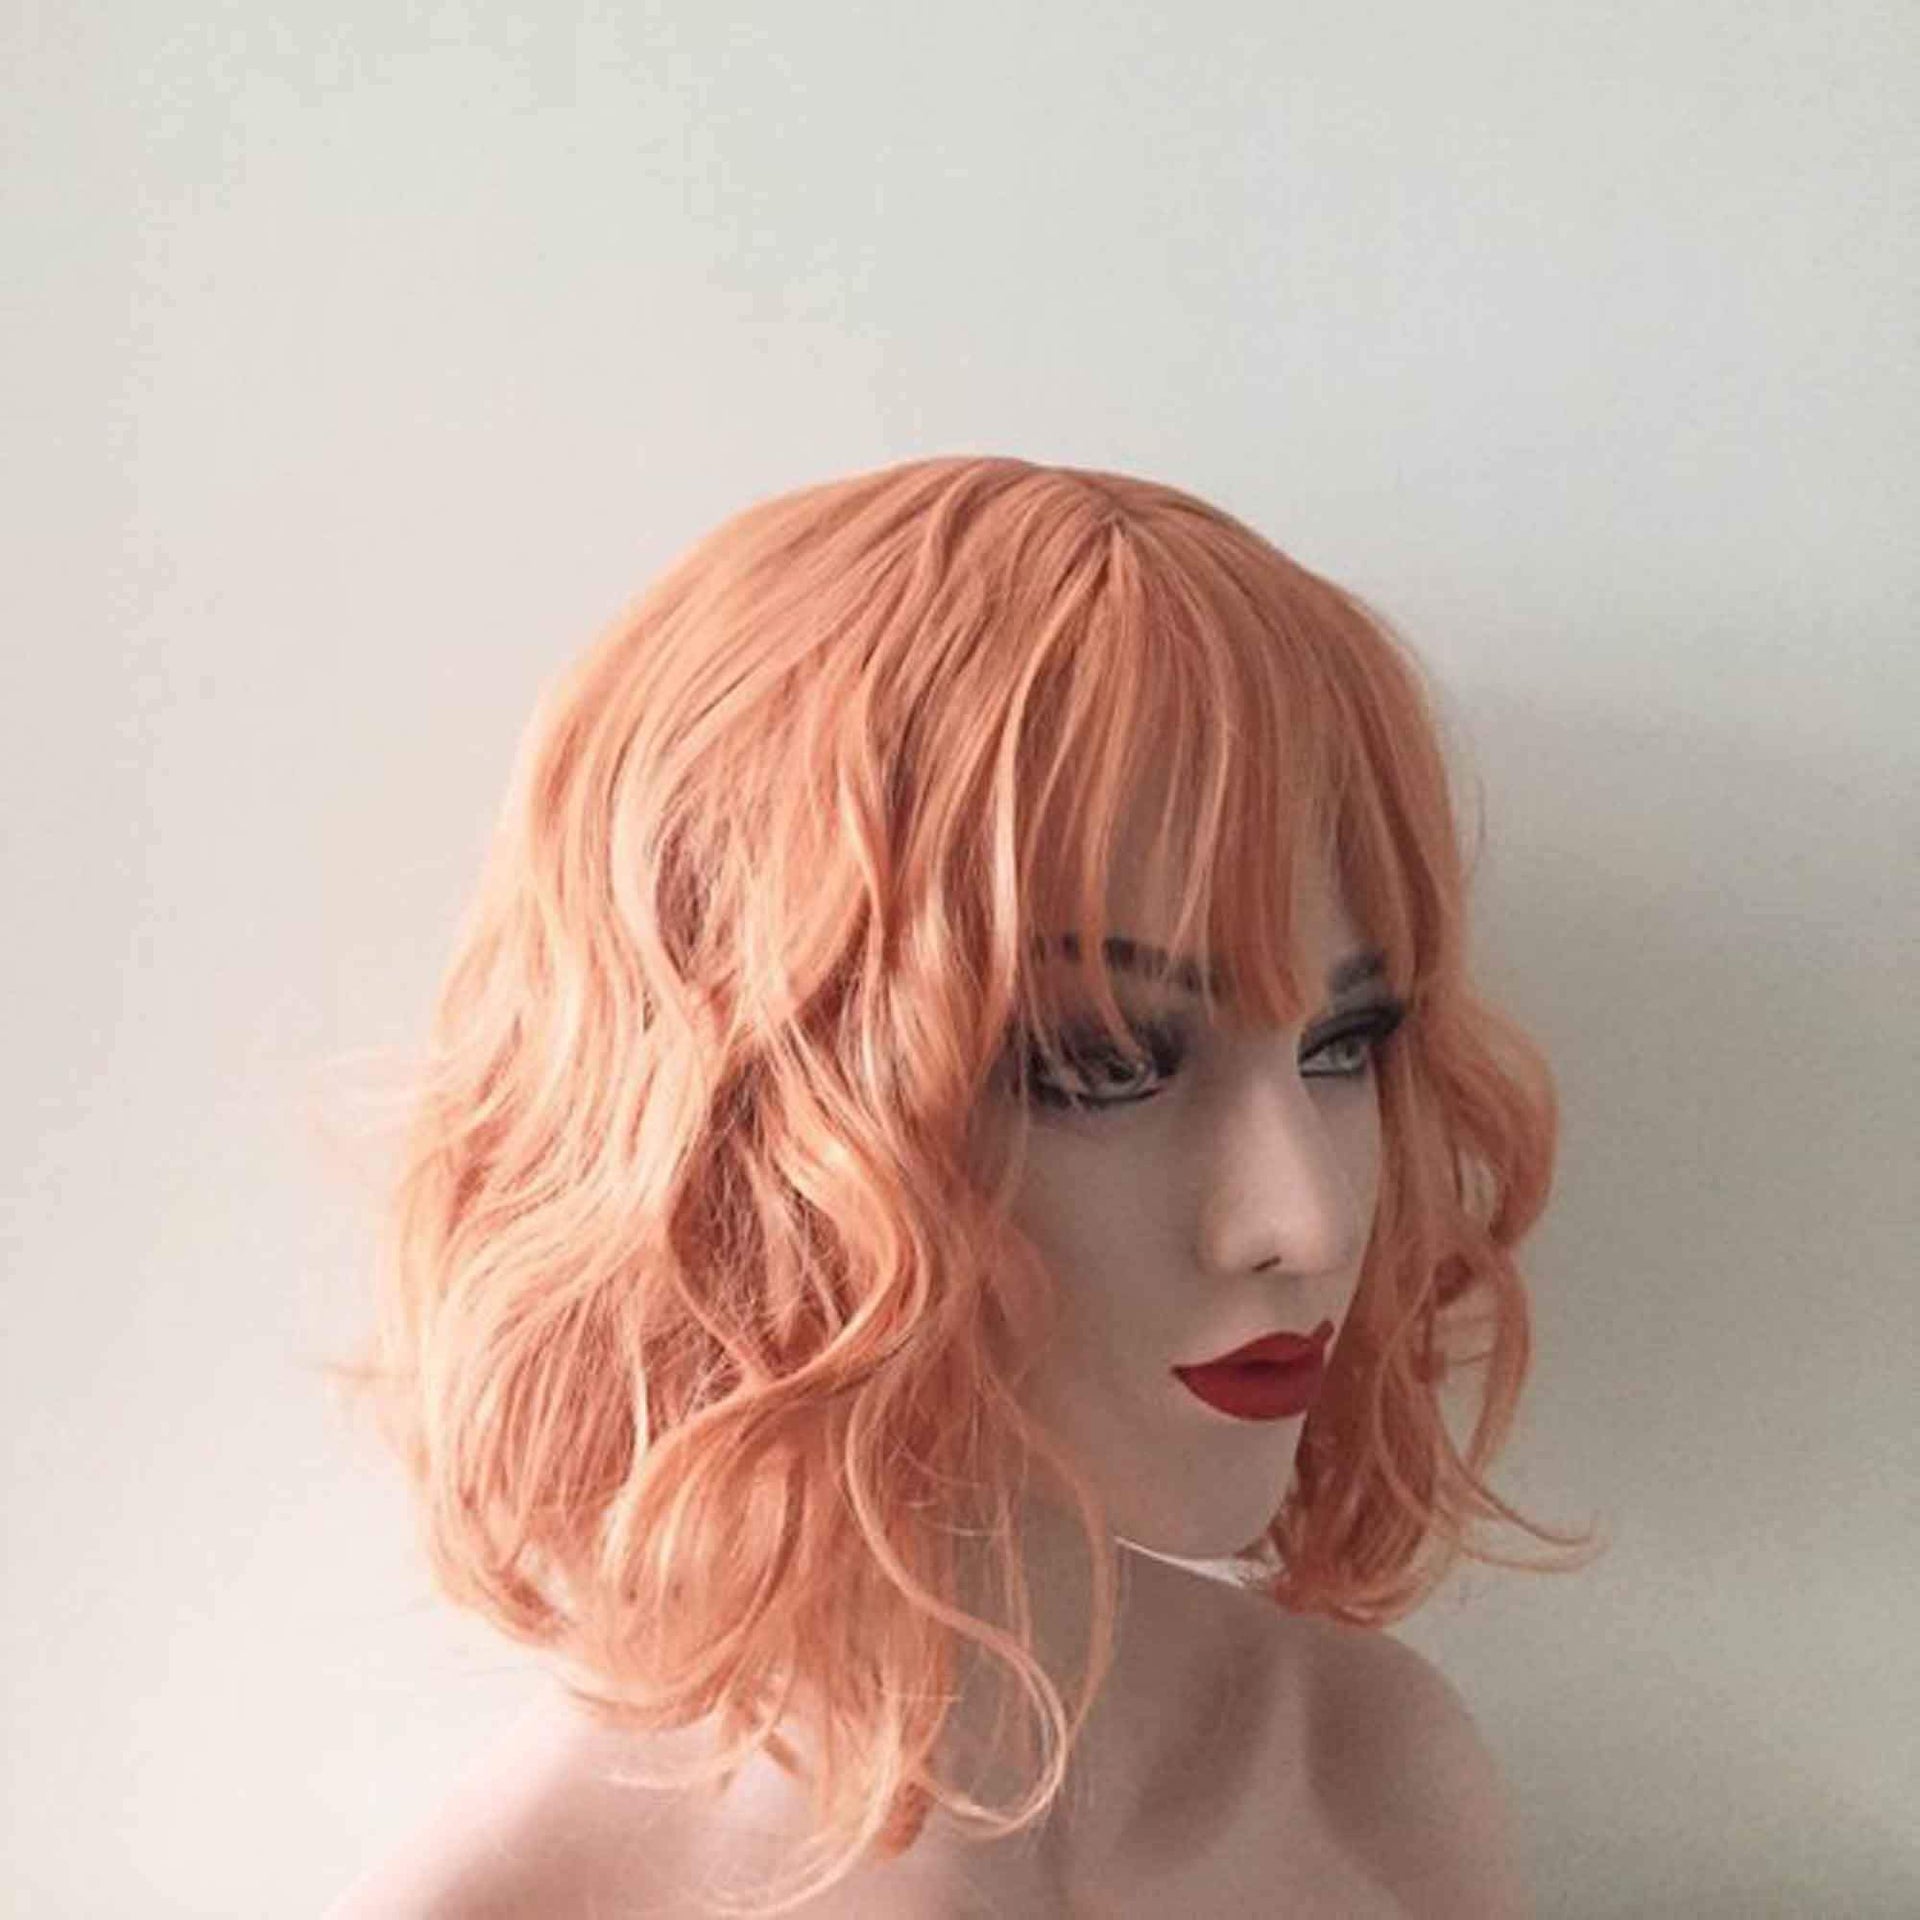 nevermindyrhead Women Orange Short Curly Bob Fringe Bangs Wig